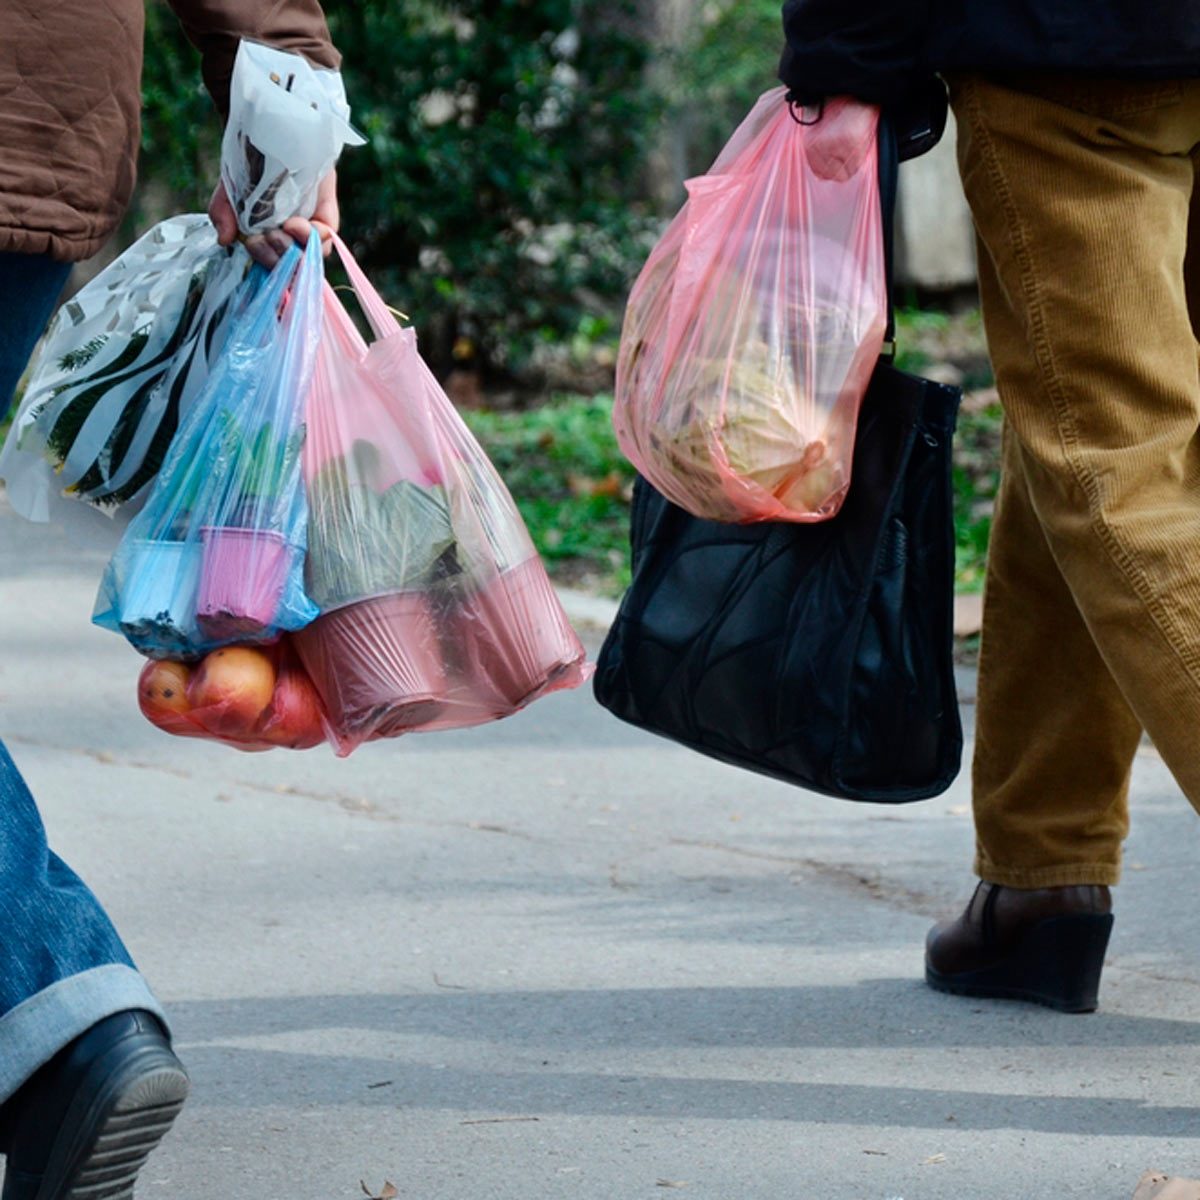 shopping bag rubbish bin - Google Search  Plastic grocery bags, Grocery bag,  Rubbish bin